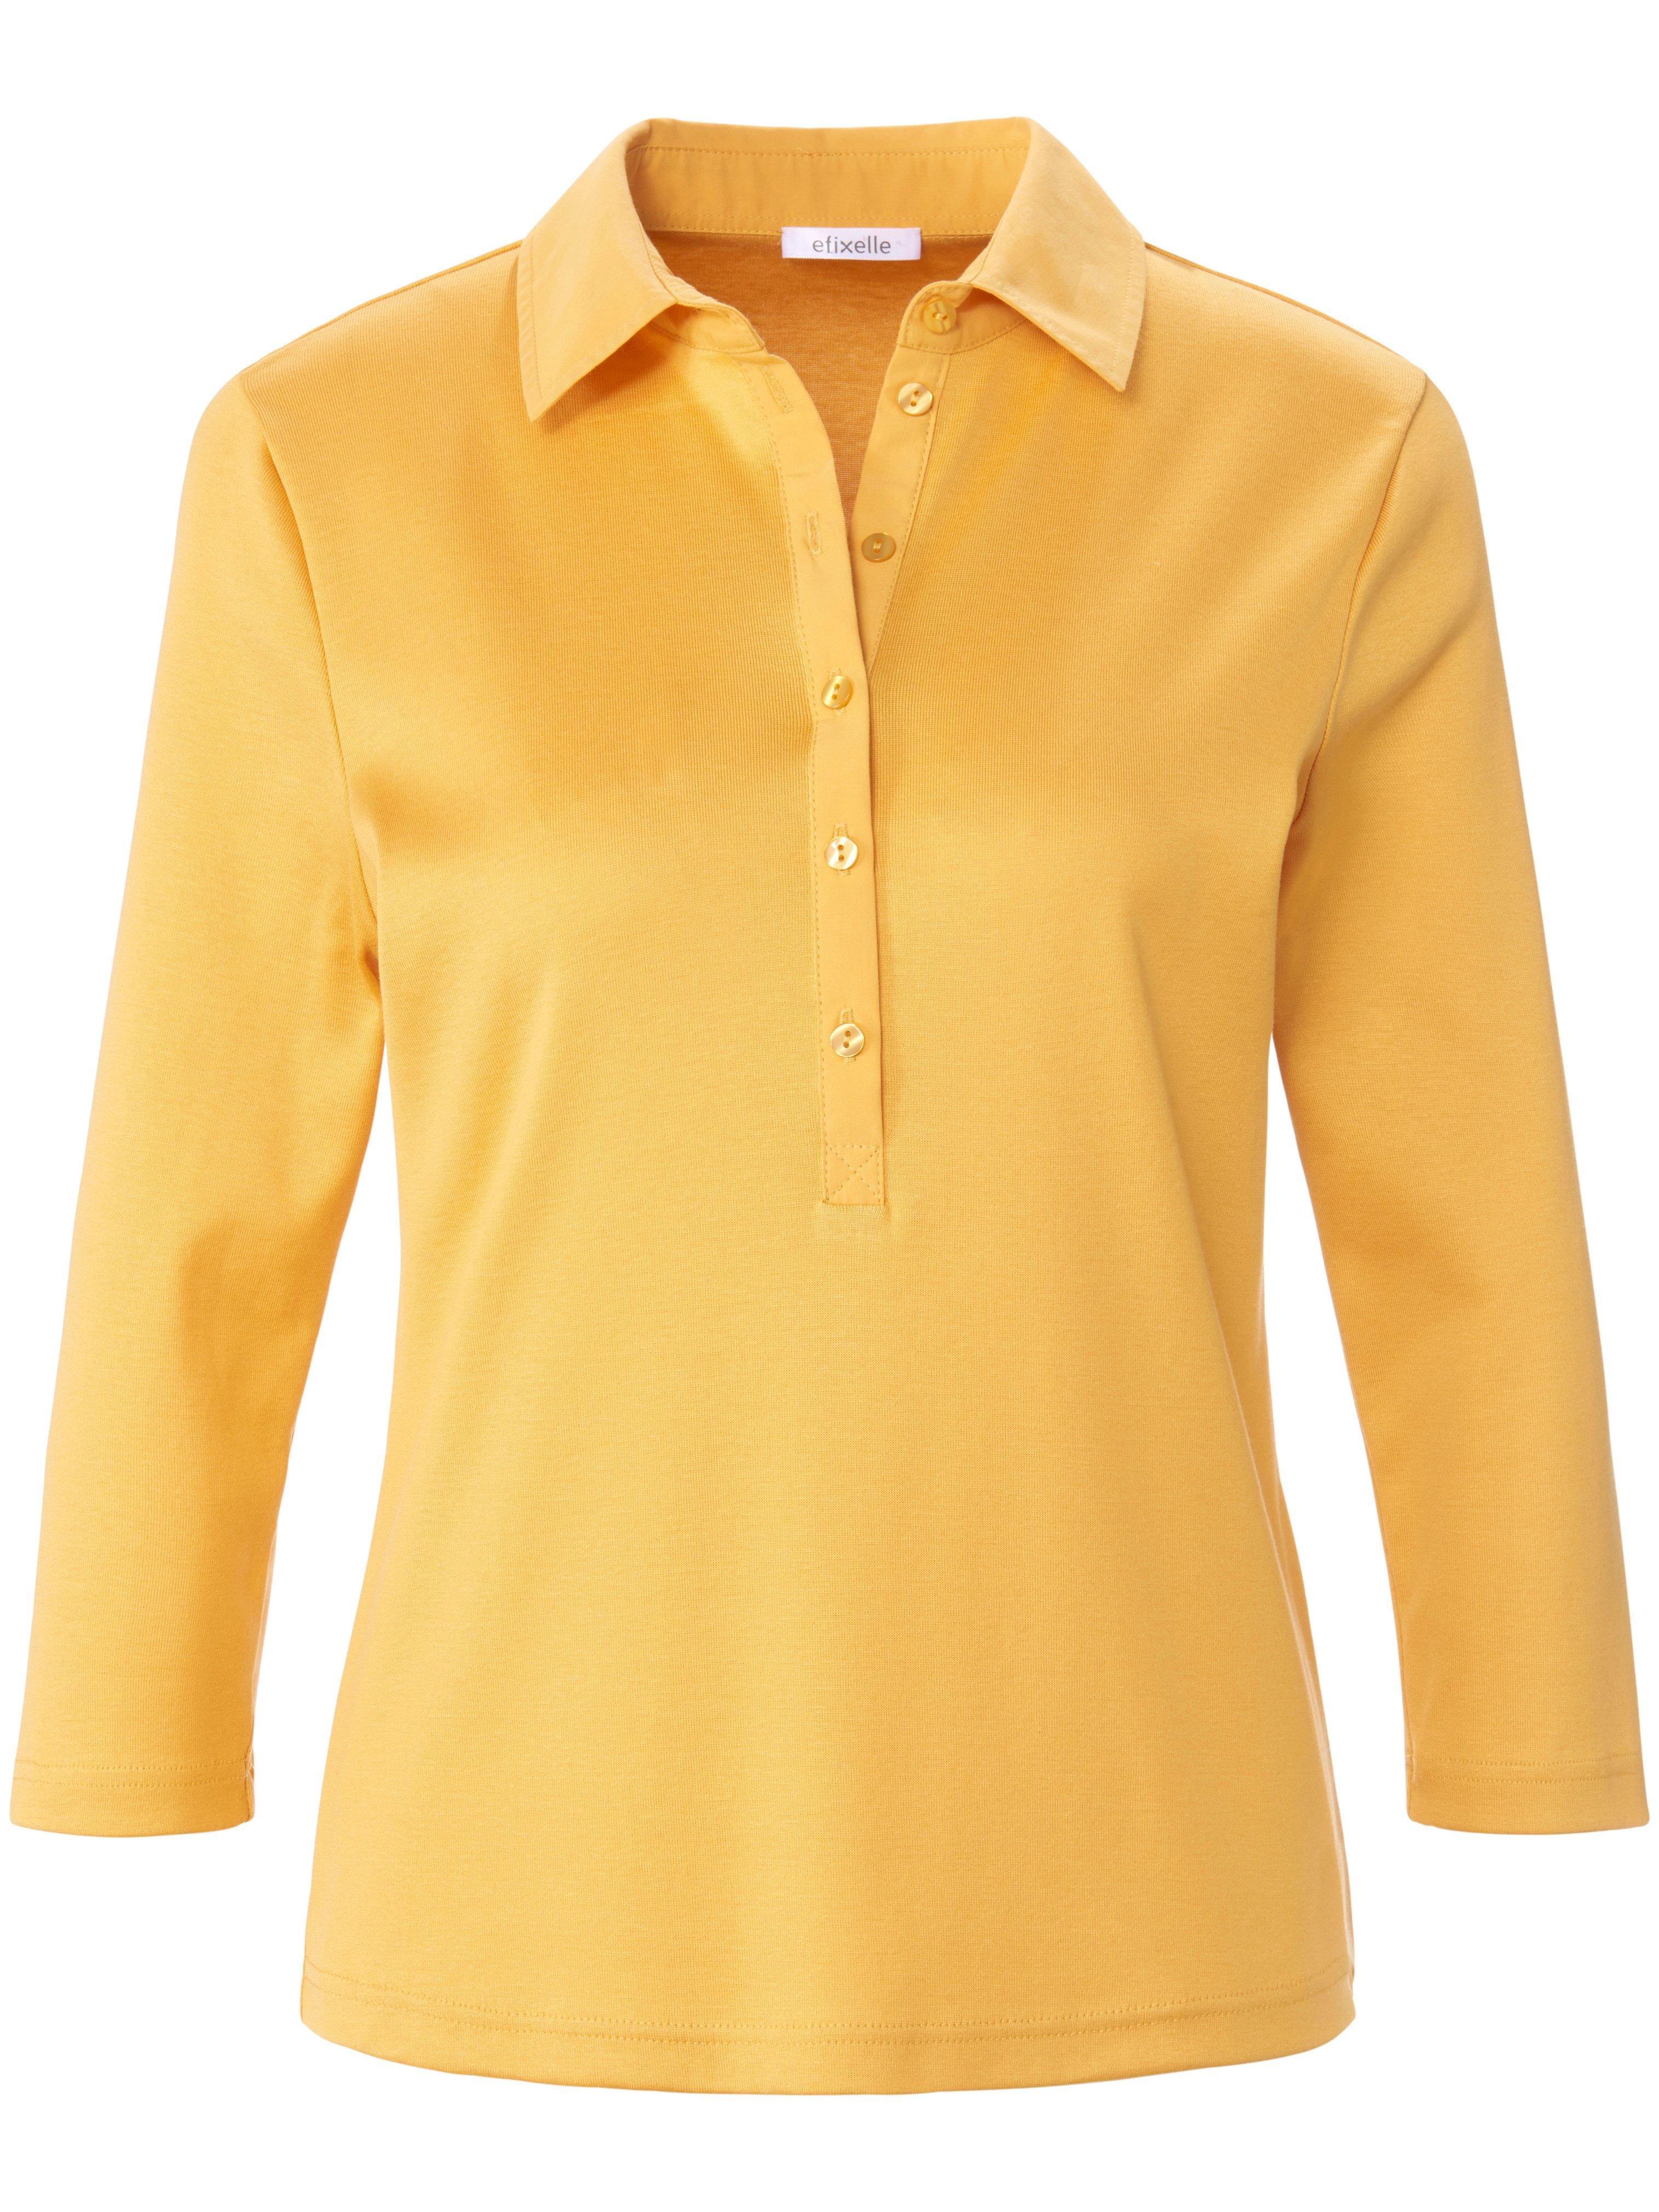 Polo-Shirt 3/4-Arm Efixelle gelb